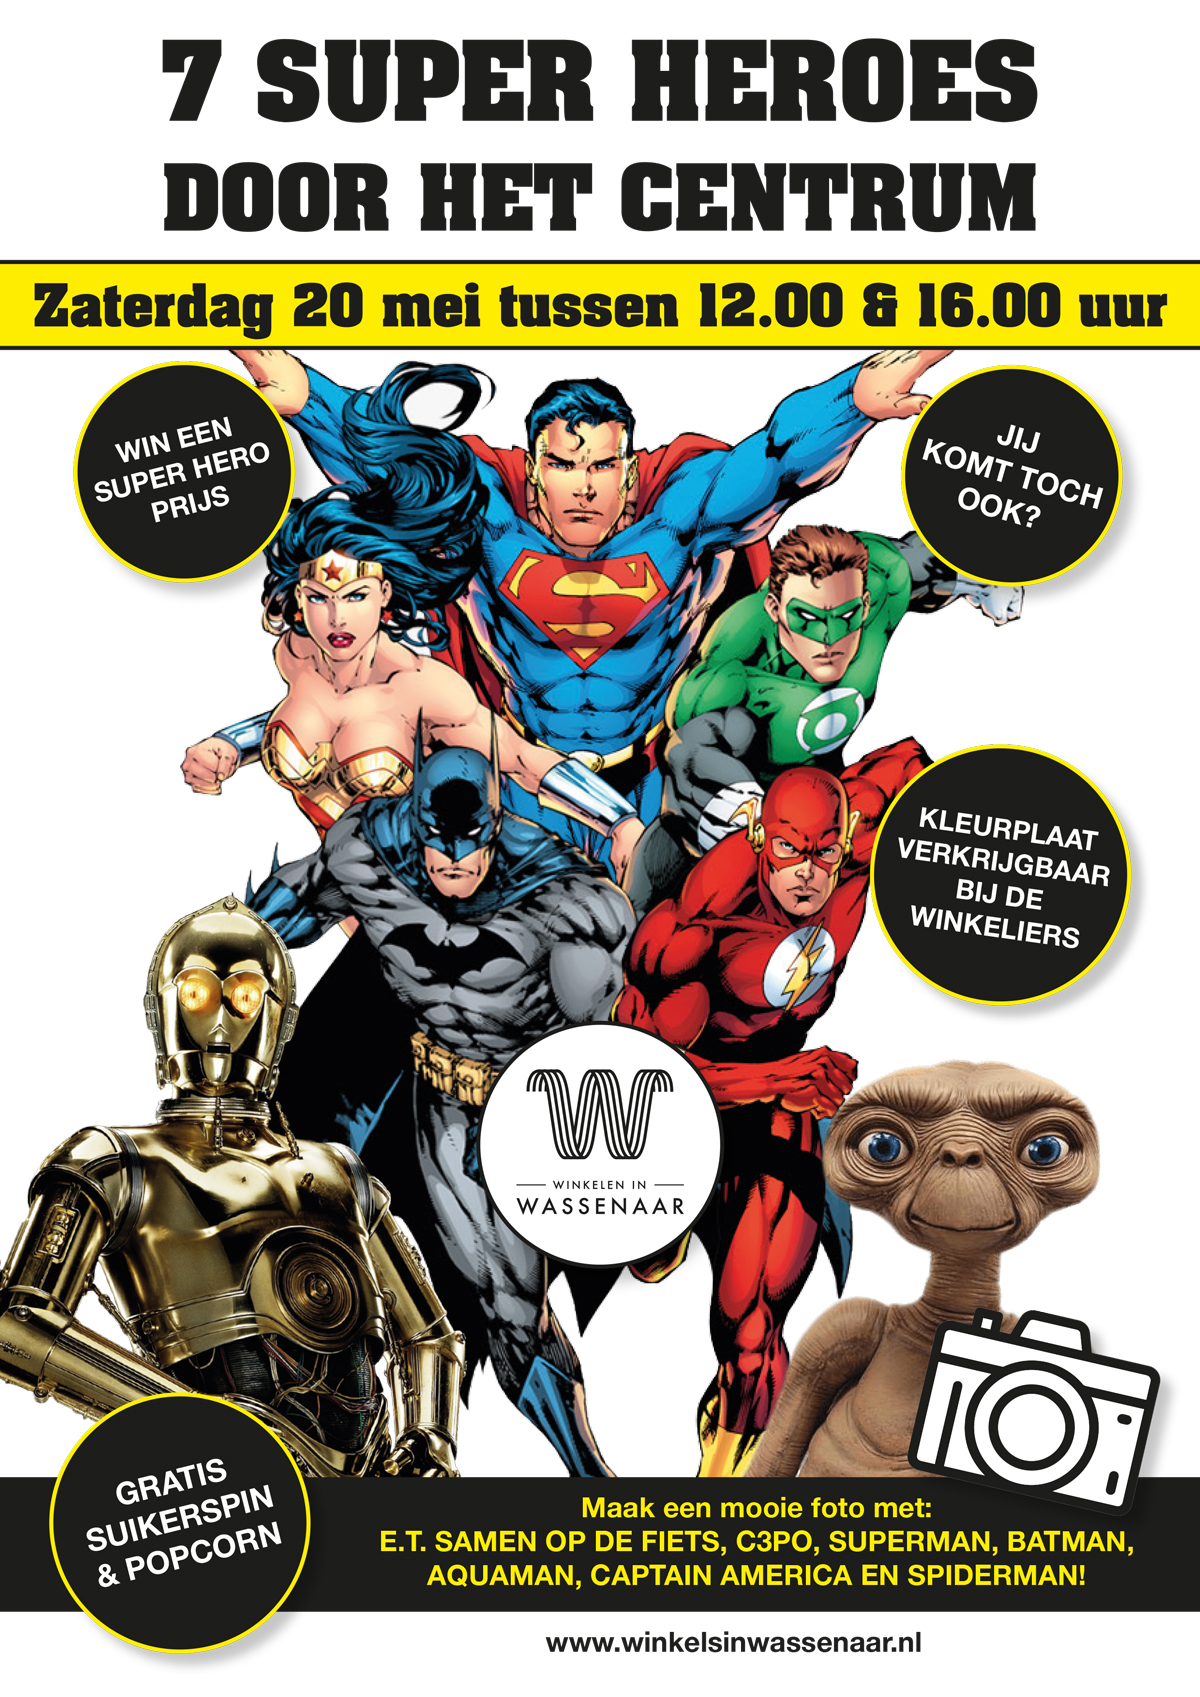 Super Heroes in Wassenaar op zaterdag 20 mei!